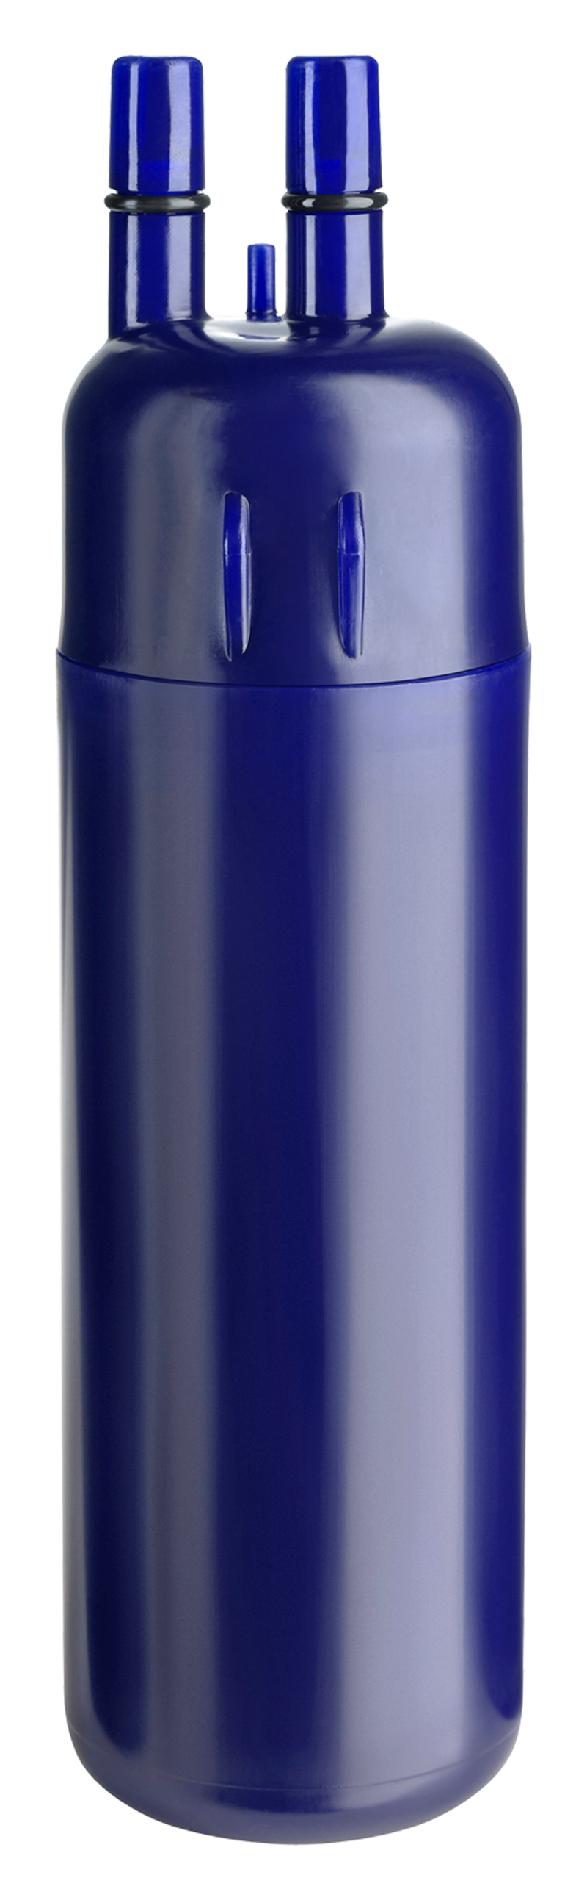 Kenmore 9930  Water Filter - Blue